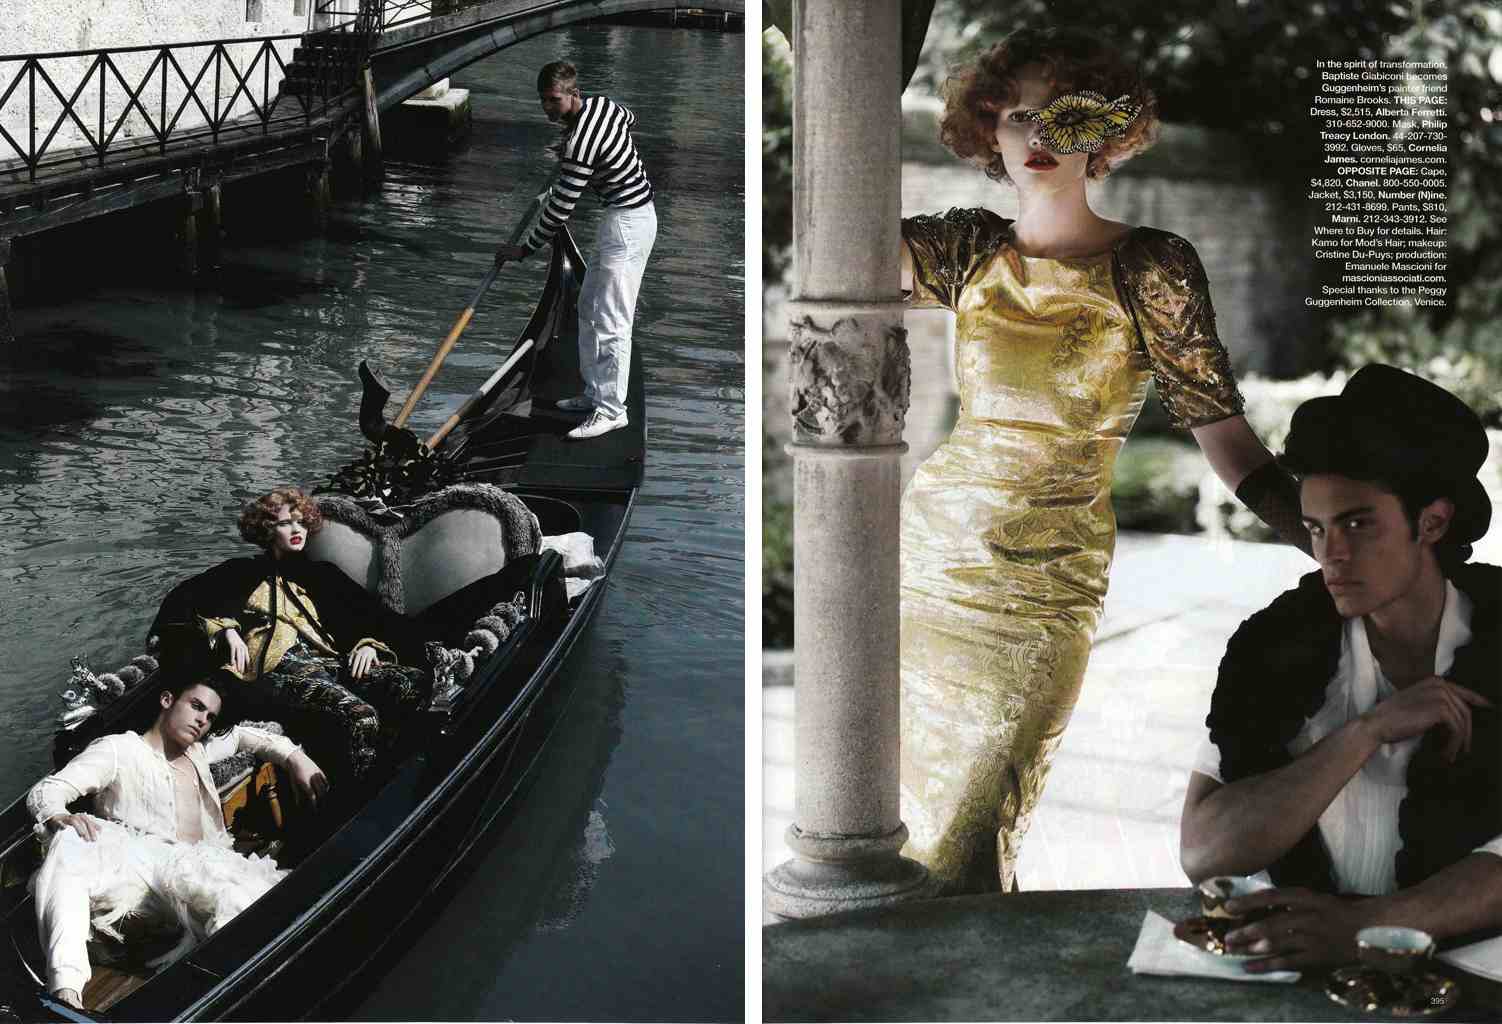 HARPER'S BAZAAR - 2009
Photographer: Karl Lagerfeld
Model: Lara Stone
Stylist: Amanda Harlech
Location: Venice - Italy